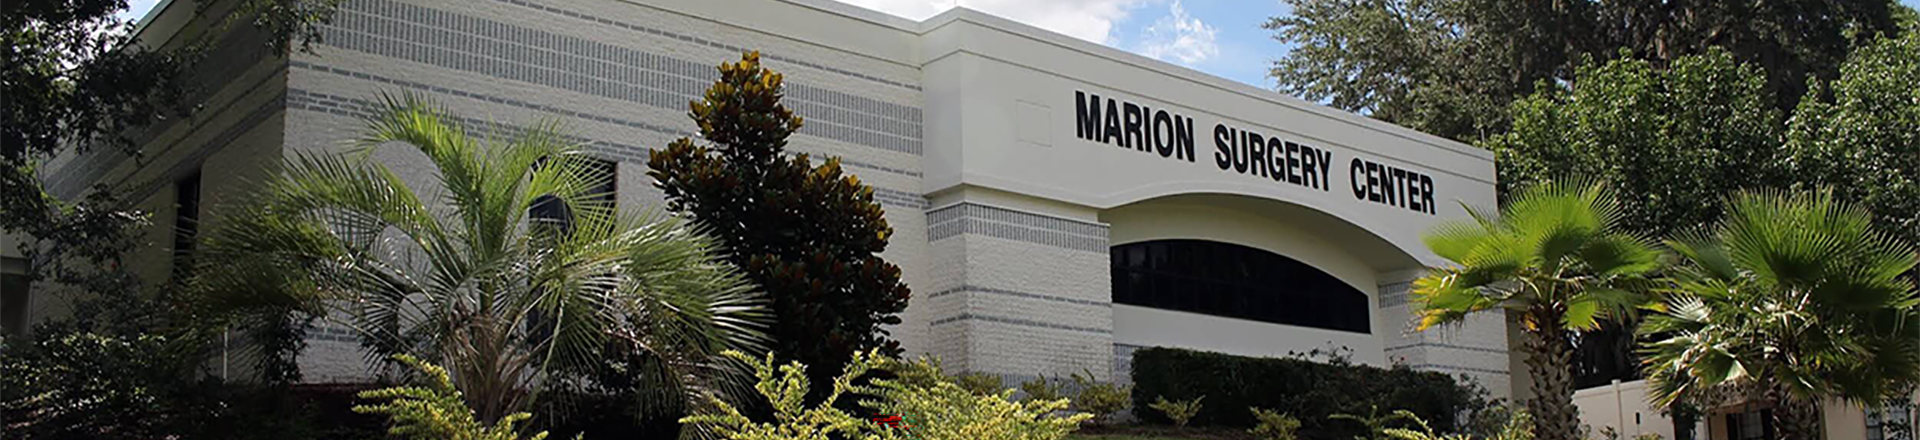 Marion Surgery Center